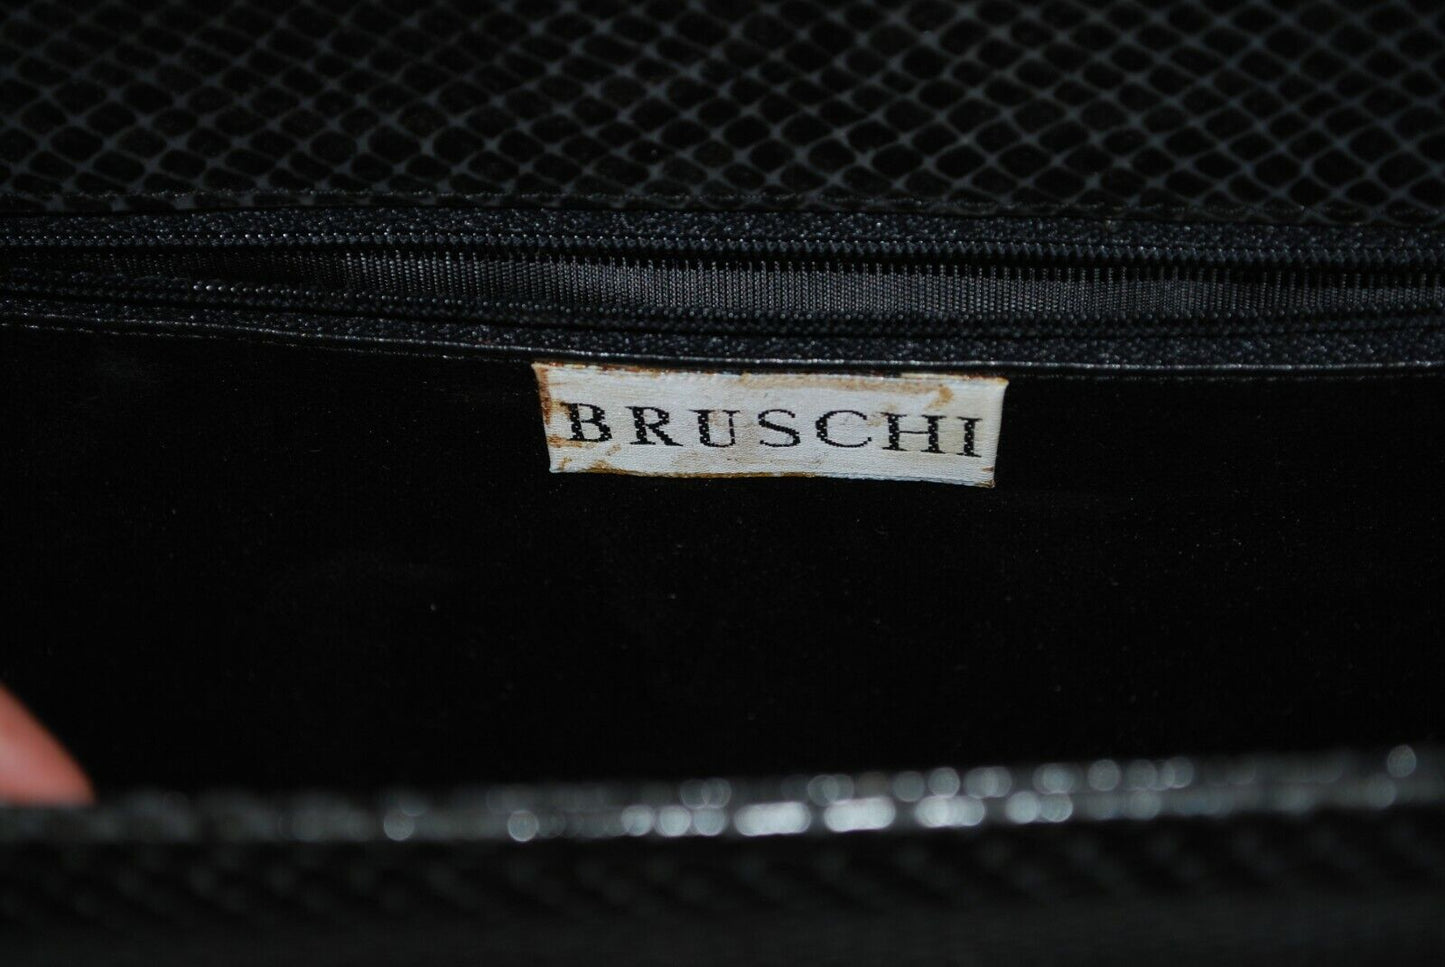 Bruschi bag